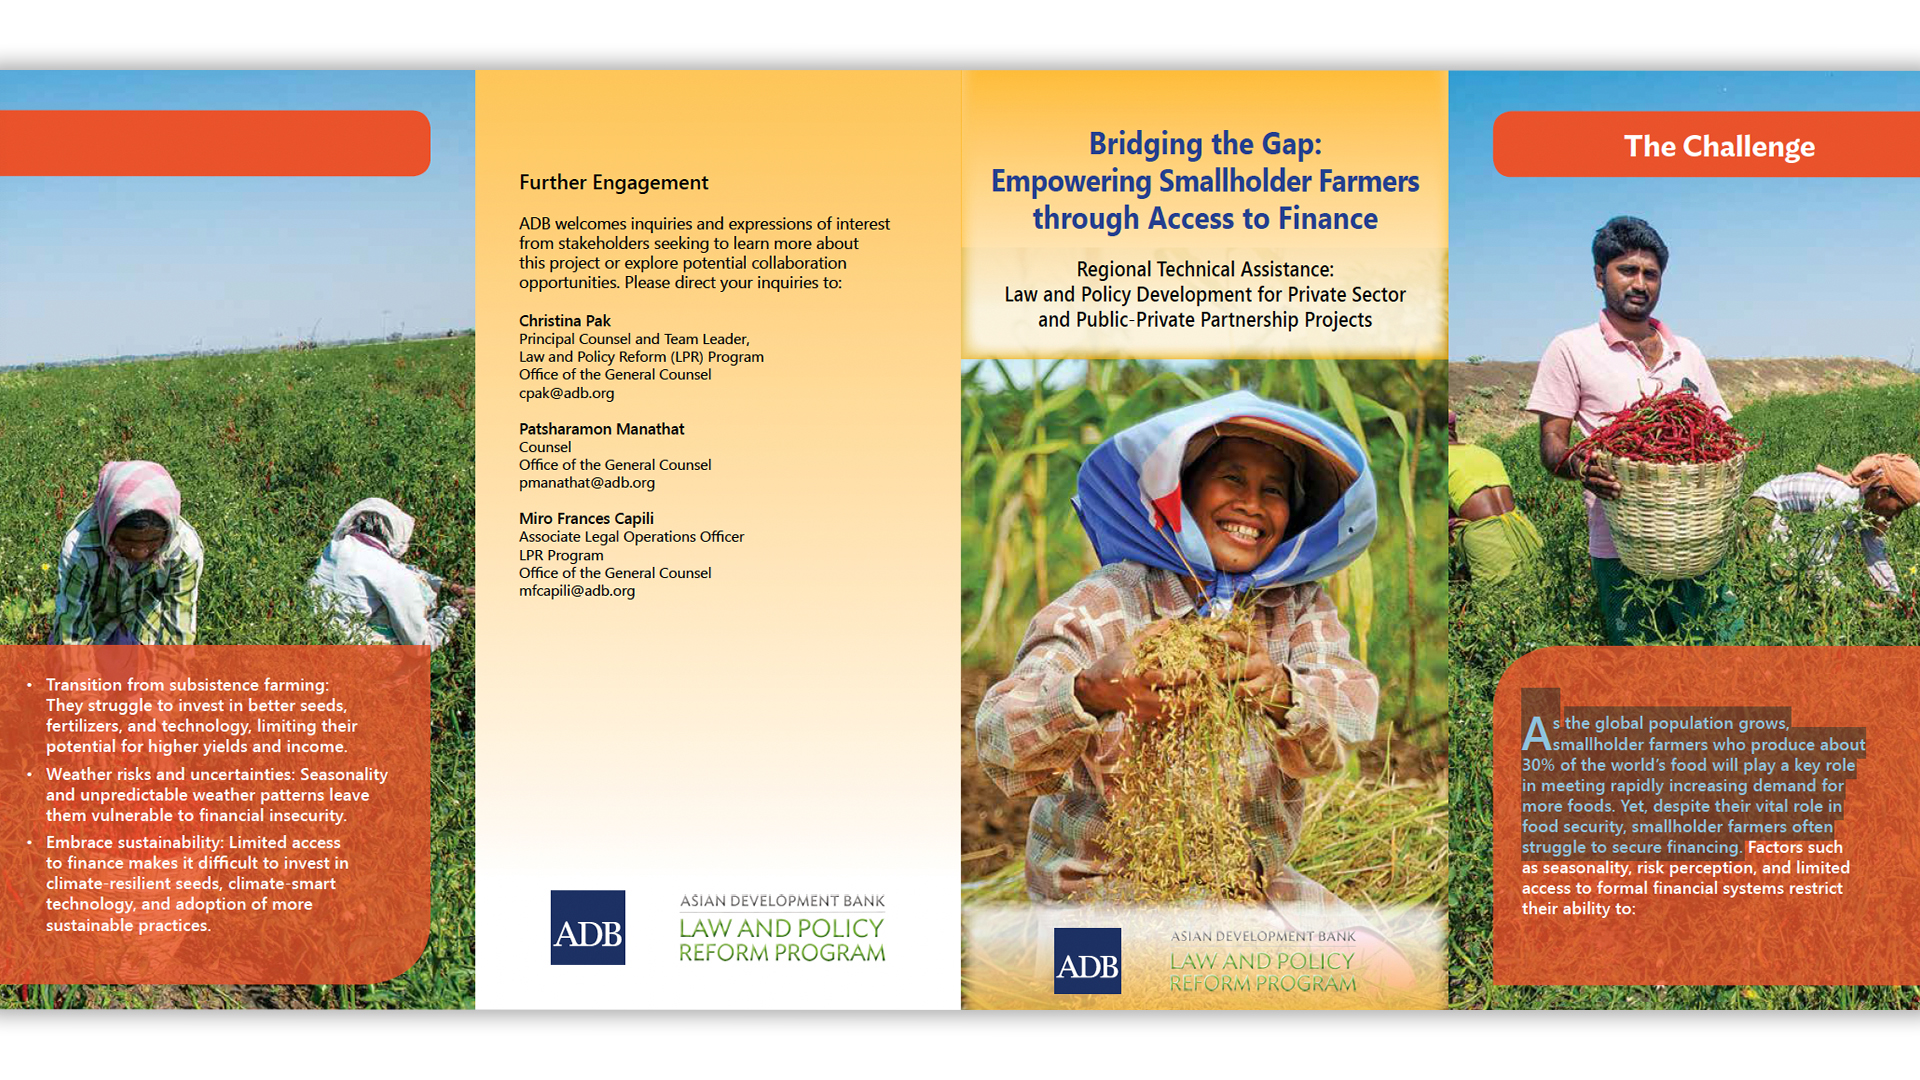 Bridging the Gap: Empowering Smallholder Farmers through Access to Finance